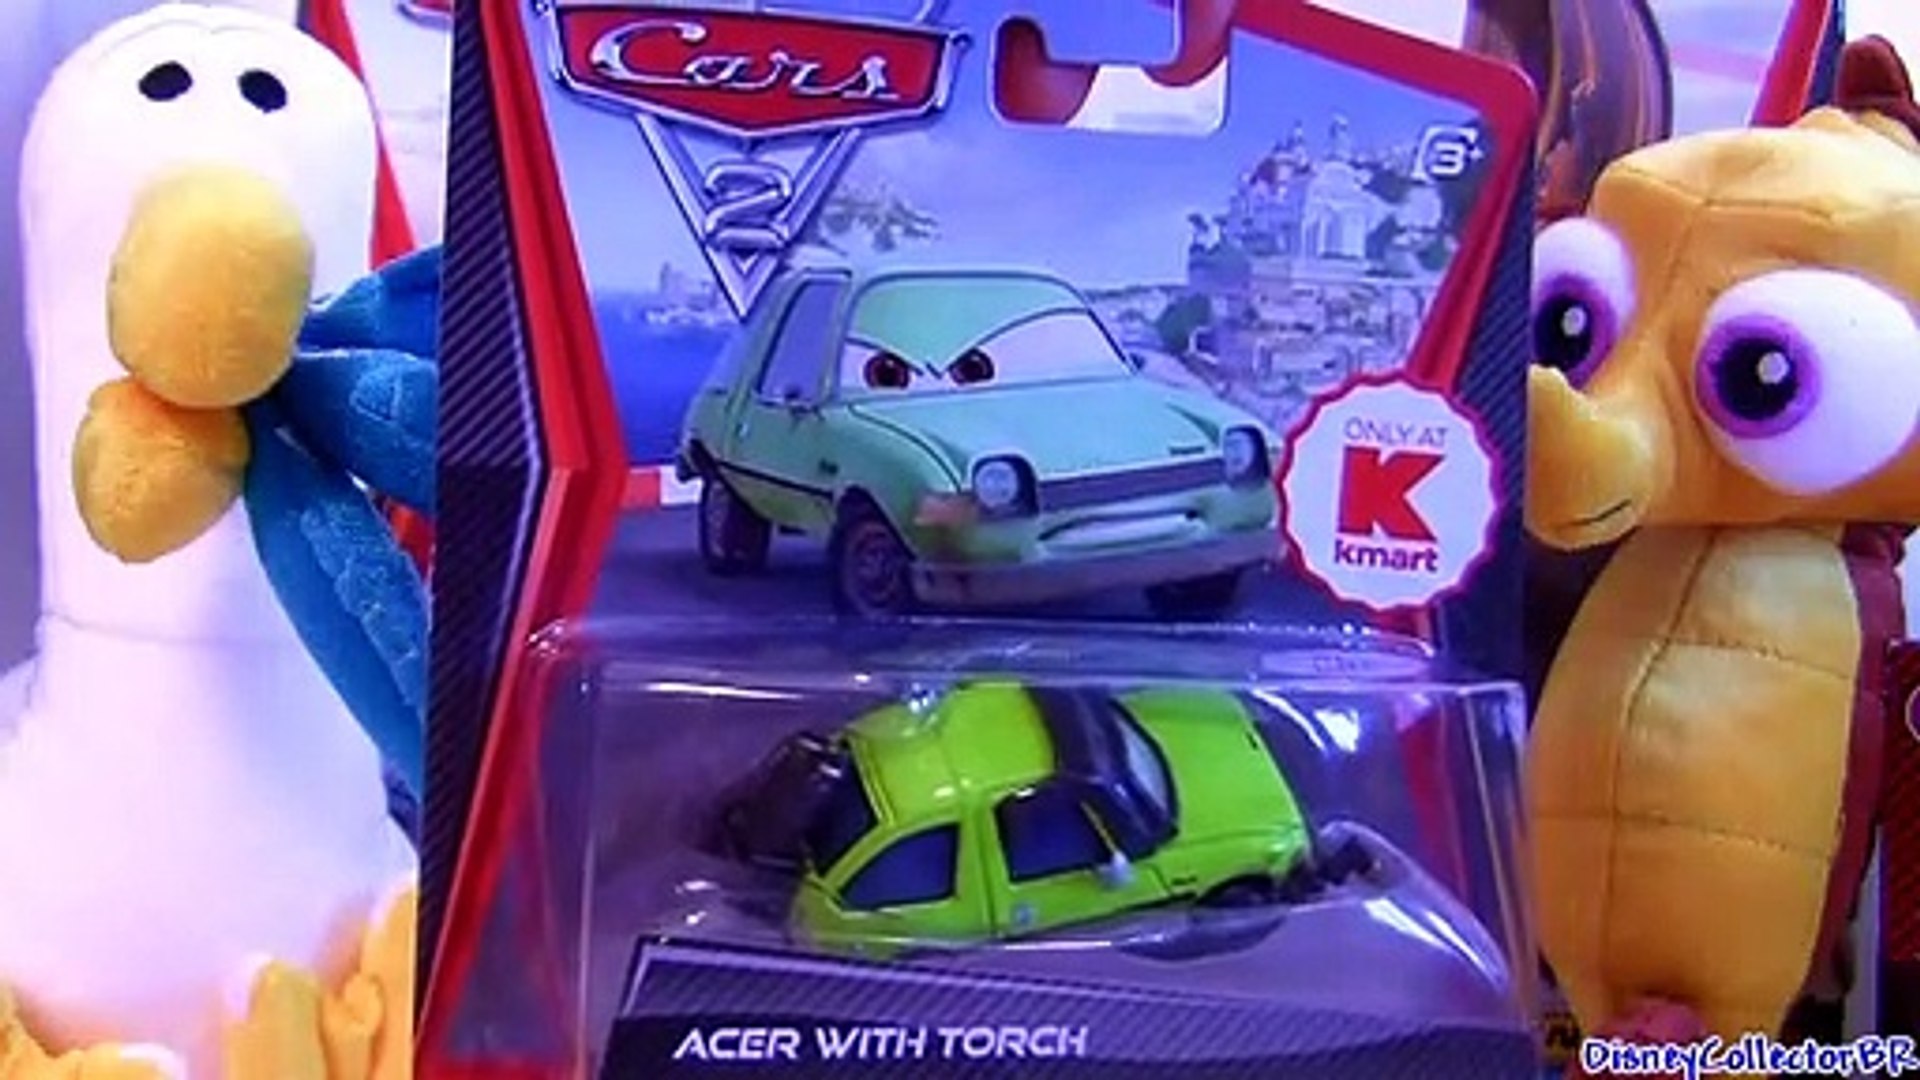 Disney Pixar Cars Acer With Torch K-Mart Exclusive Die cast